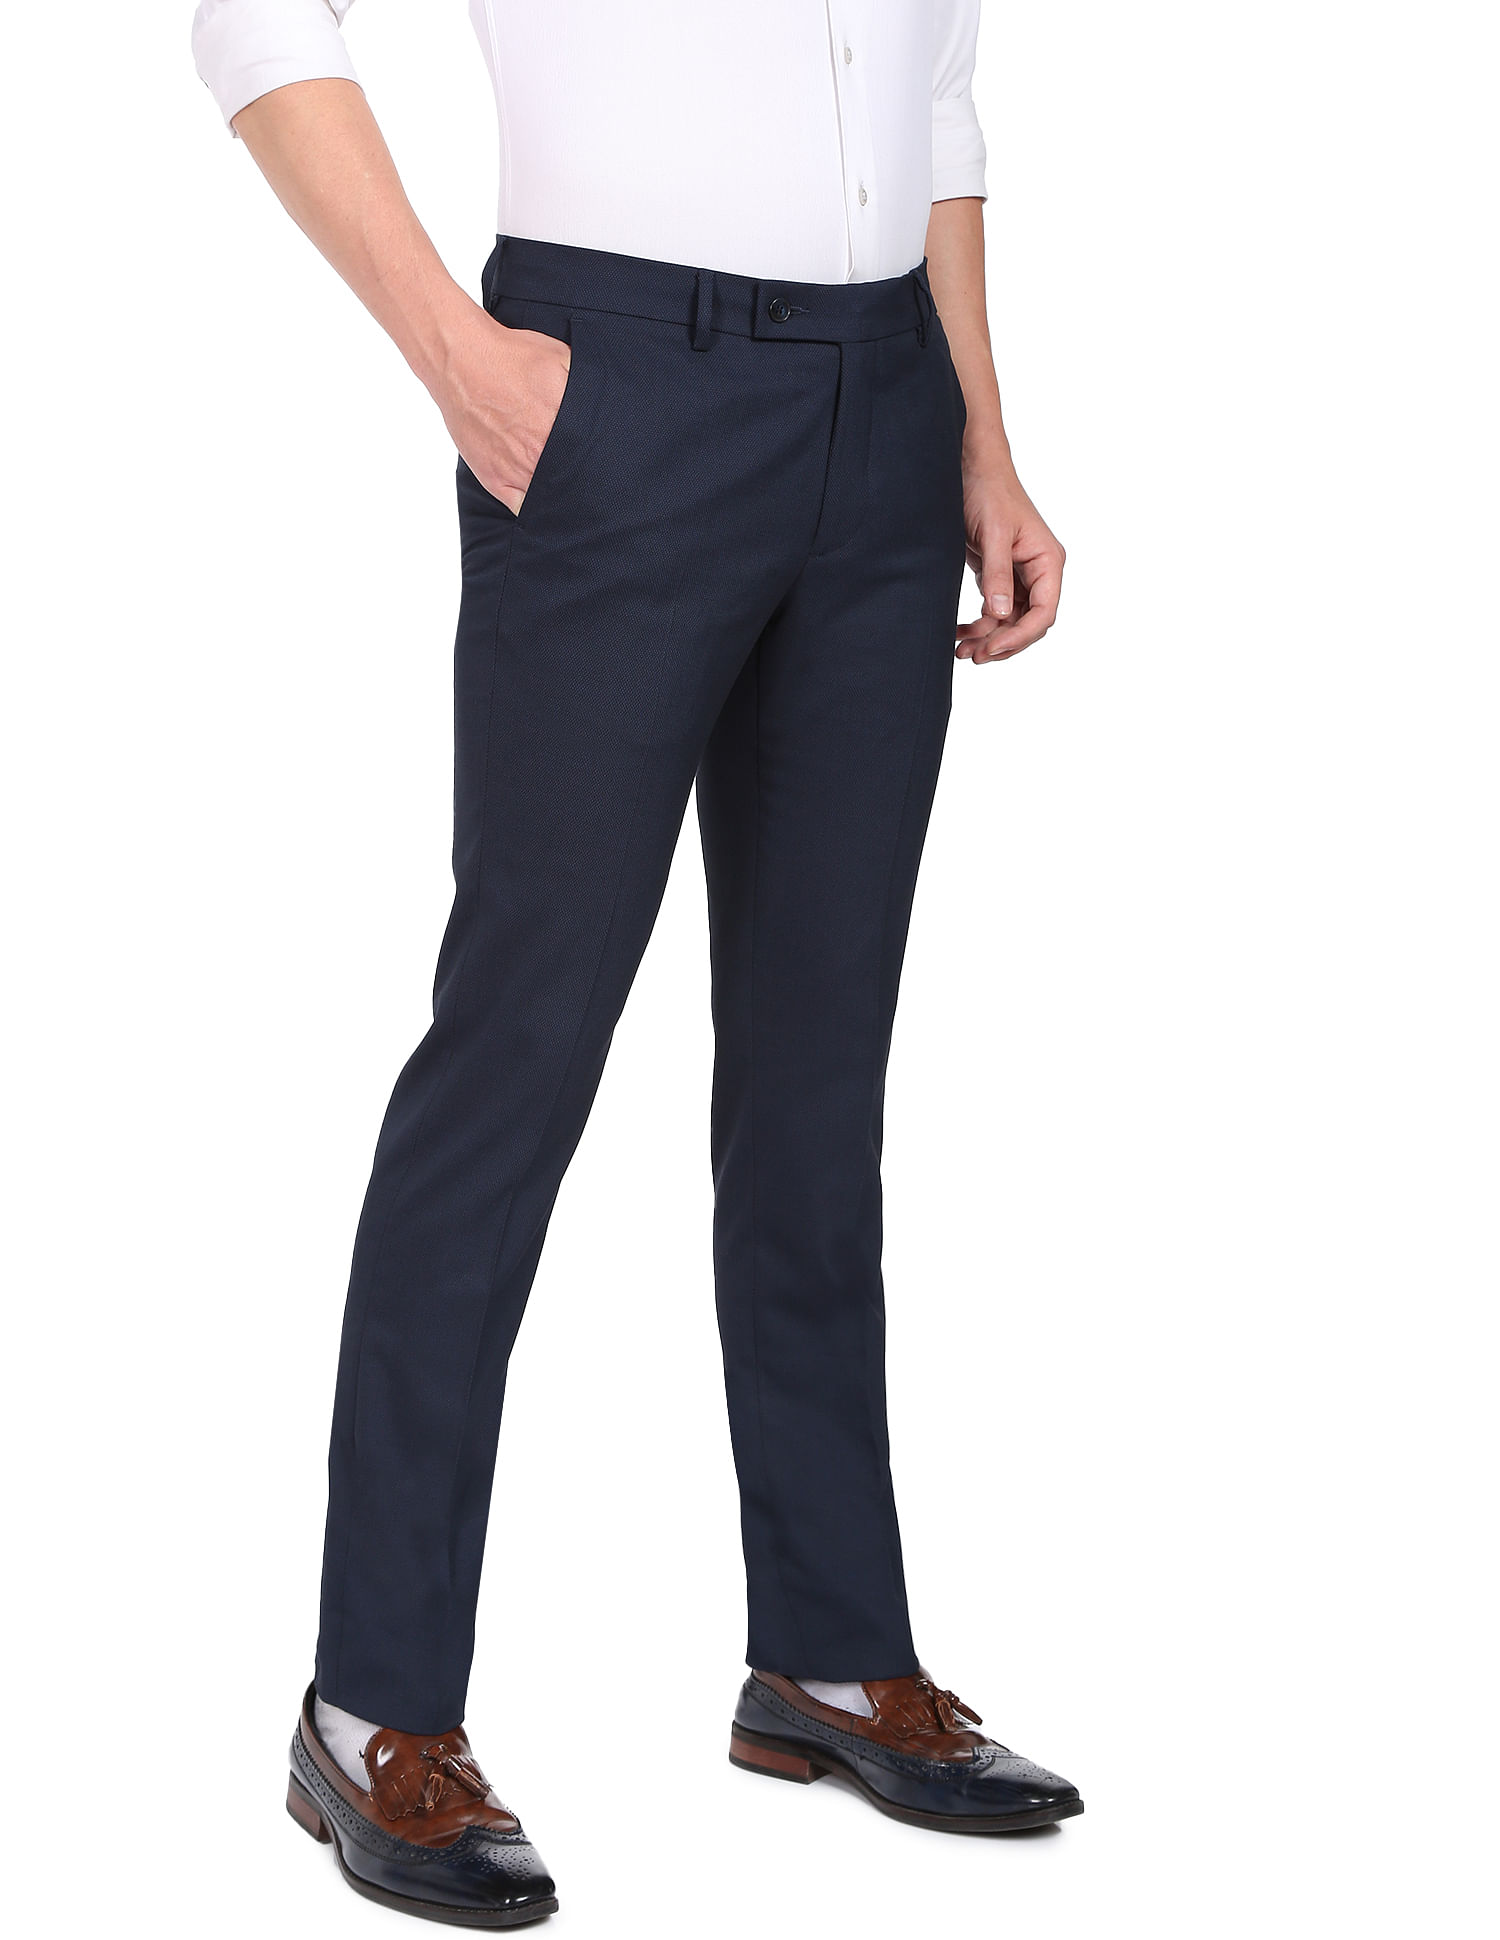 Buy MARK LEWIS PV Slim Fit Black, Blue, Brown Formal Pant for Gents -  Comfortable, Soft Feel Formal Trouser for Men - Formal Pant for Men Office,  Travel, Meeting, Interview Combo Pack